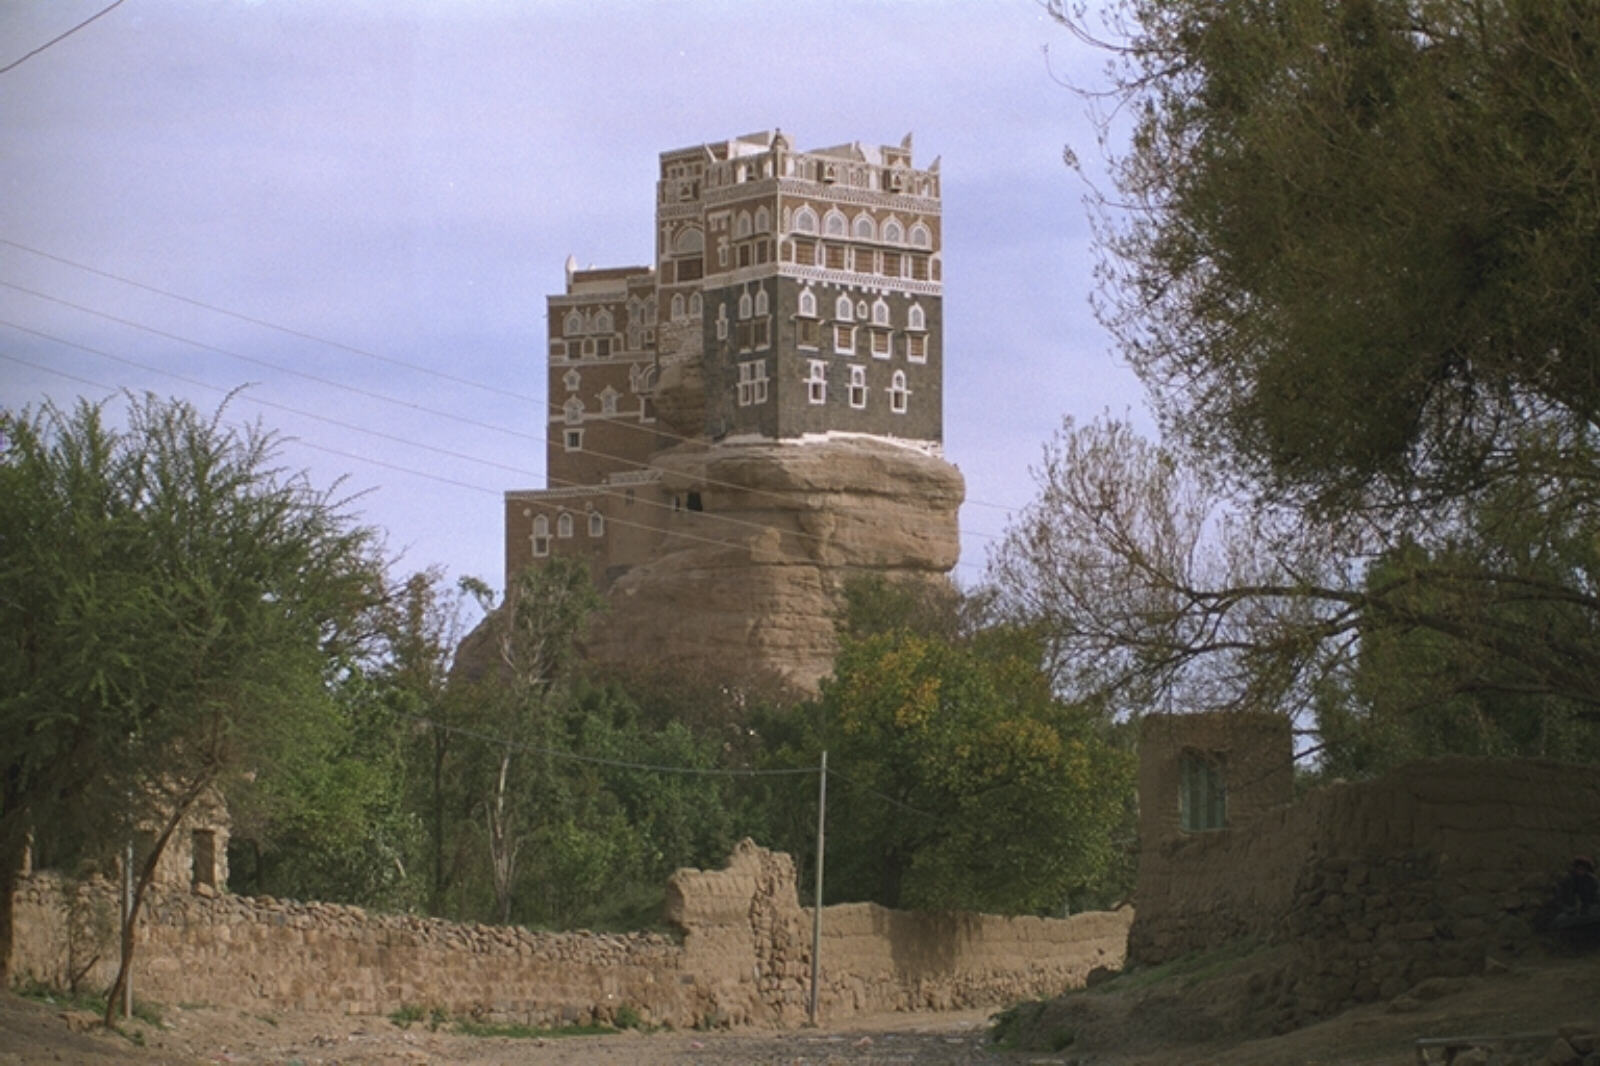 The palace house in Wadi Dahr, near Sanaa, Yemen